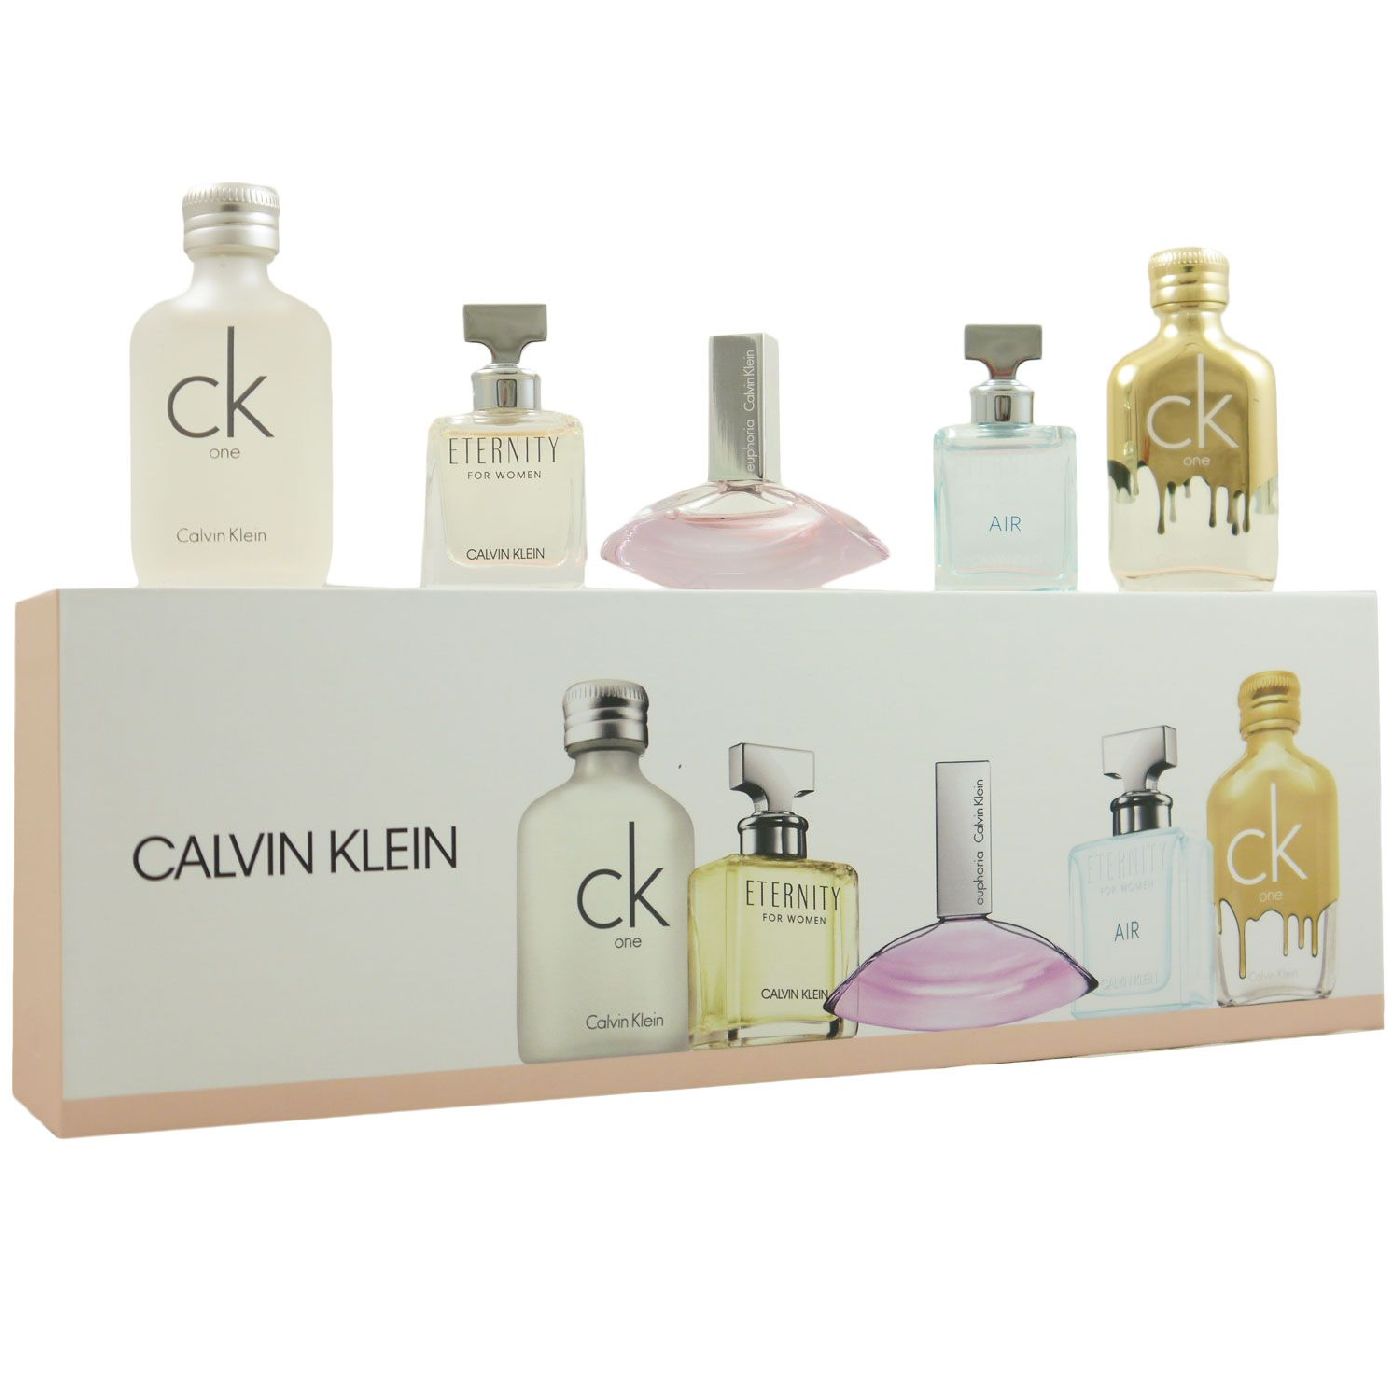 Miniatur CK Be by Calvin Klein Eau de Toilette 0,5 fl.oz/15 ml Unisex  Armband Idee Geschenk - .de